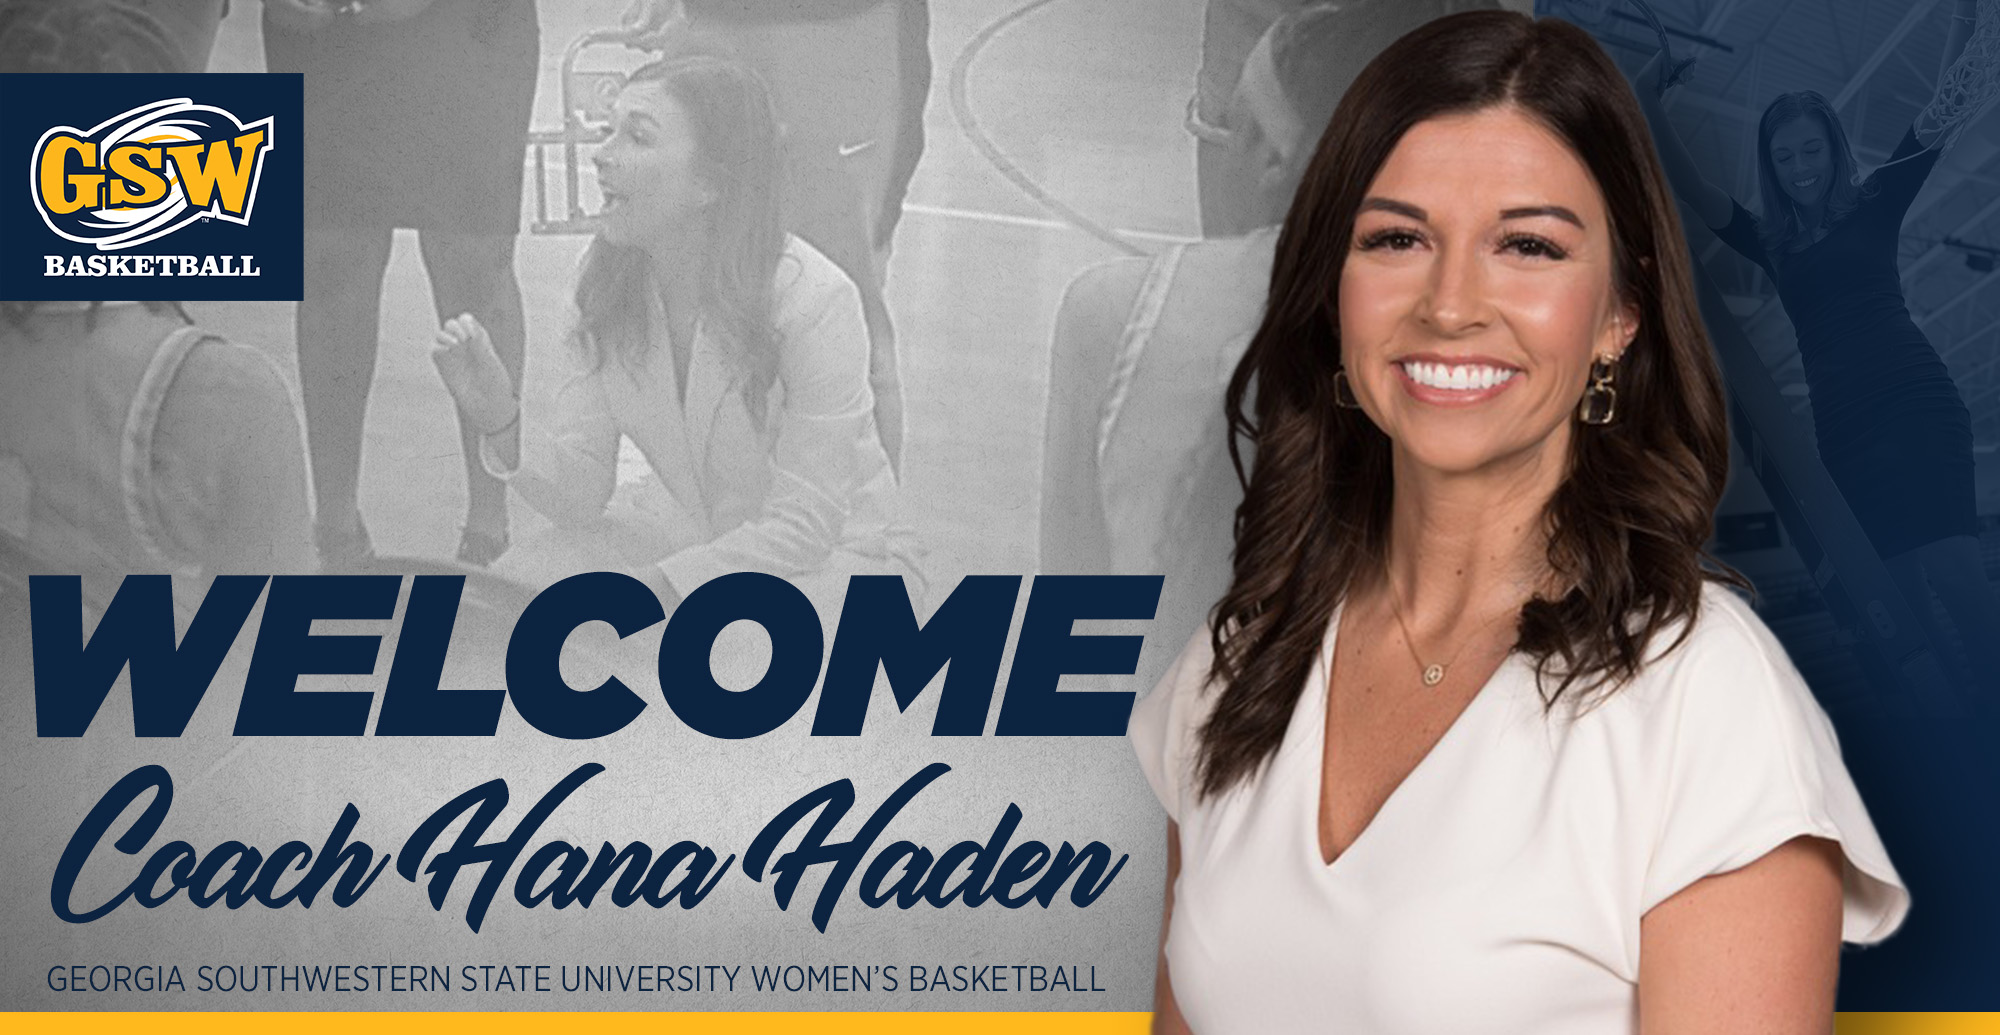 Hana Haden to Lead GSW Women's Basketball